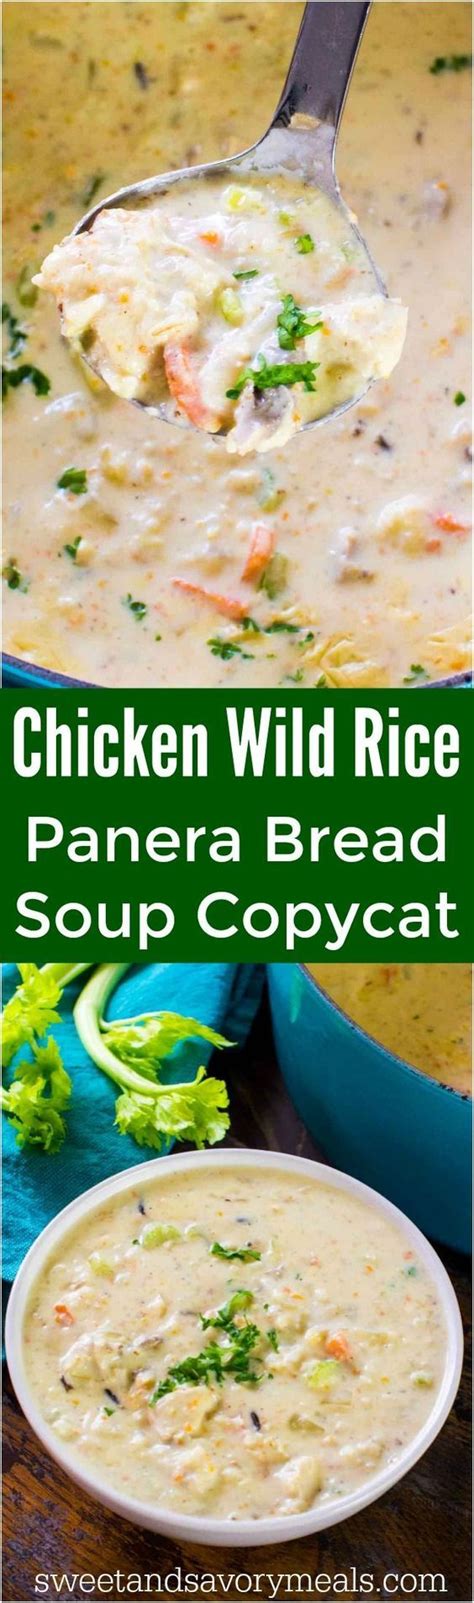 Season with salt and pepper to taste. Panera Bread Chicken Wild Rice Soup Copycat [VIDEO ...